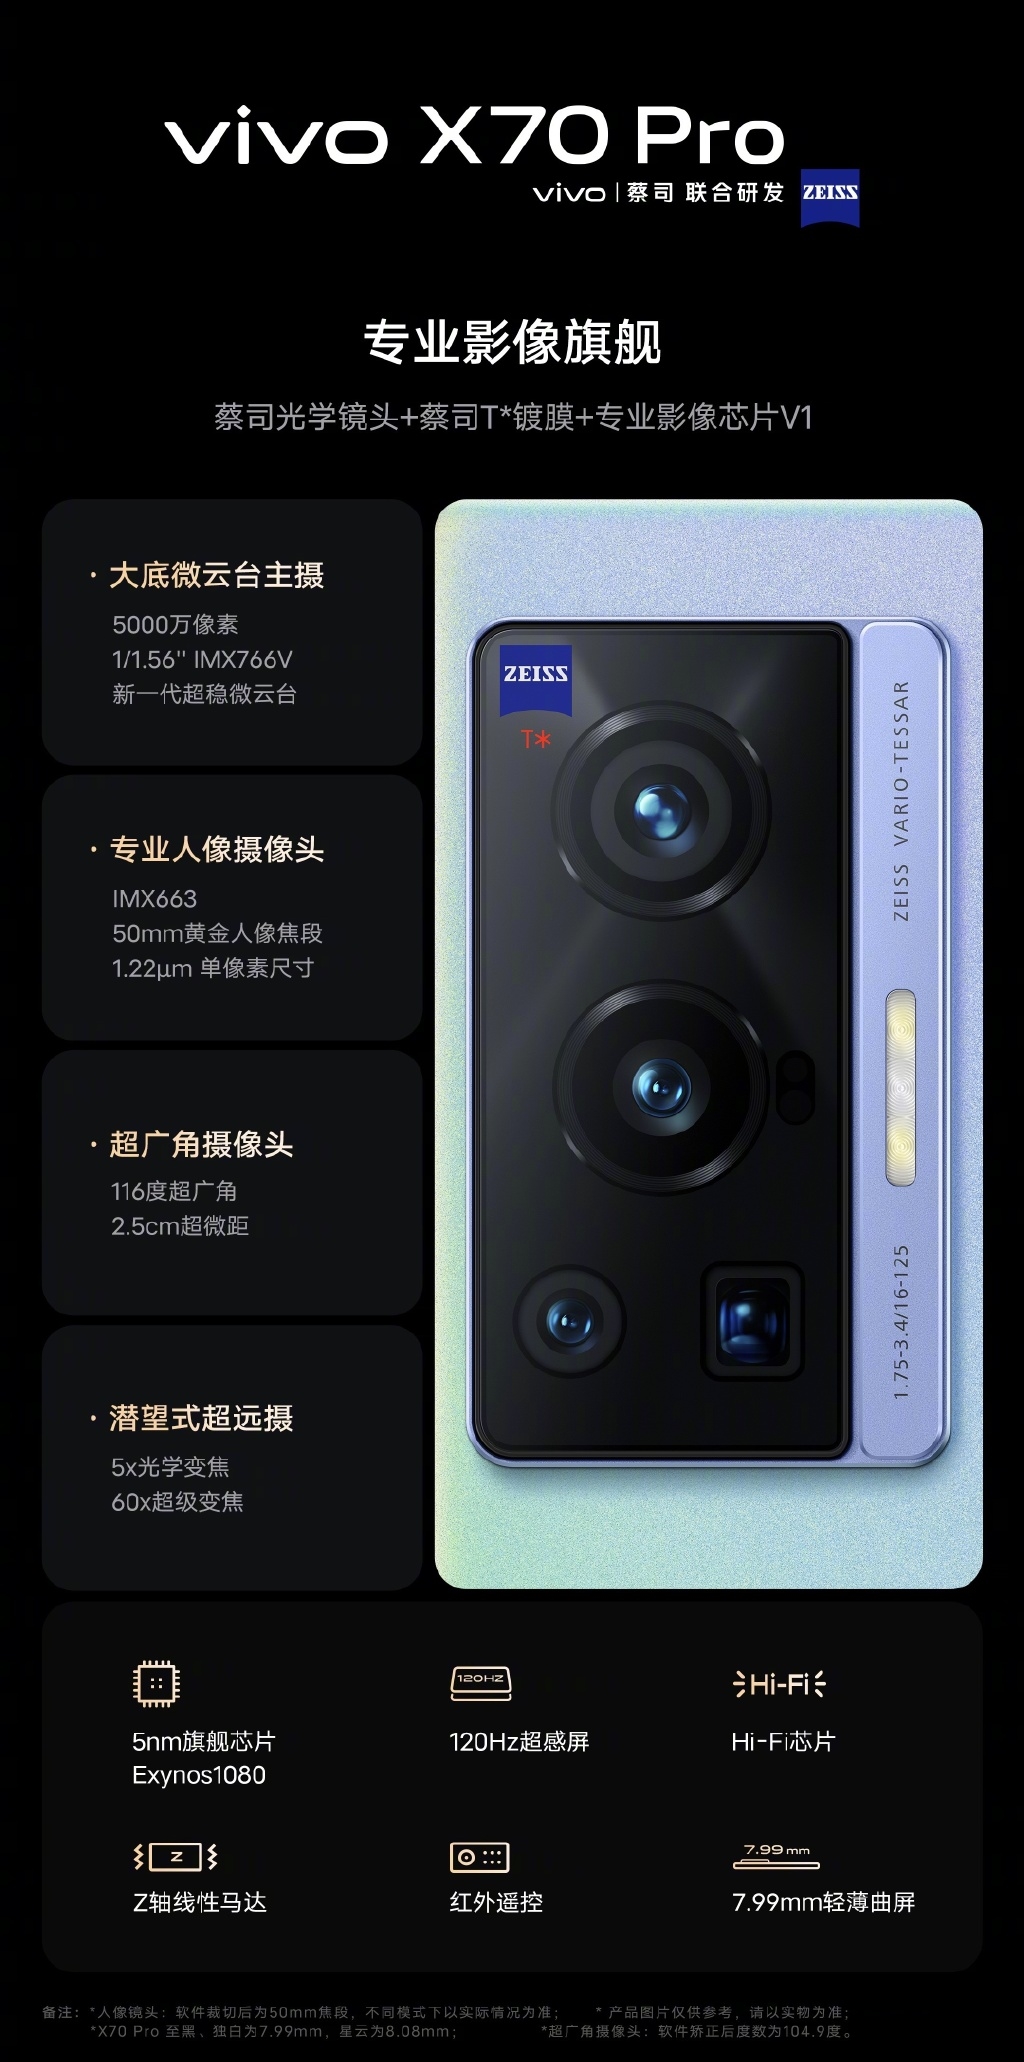 Особенности камер смартфонов серии Vivo X70